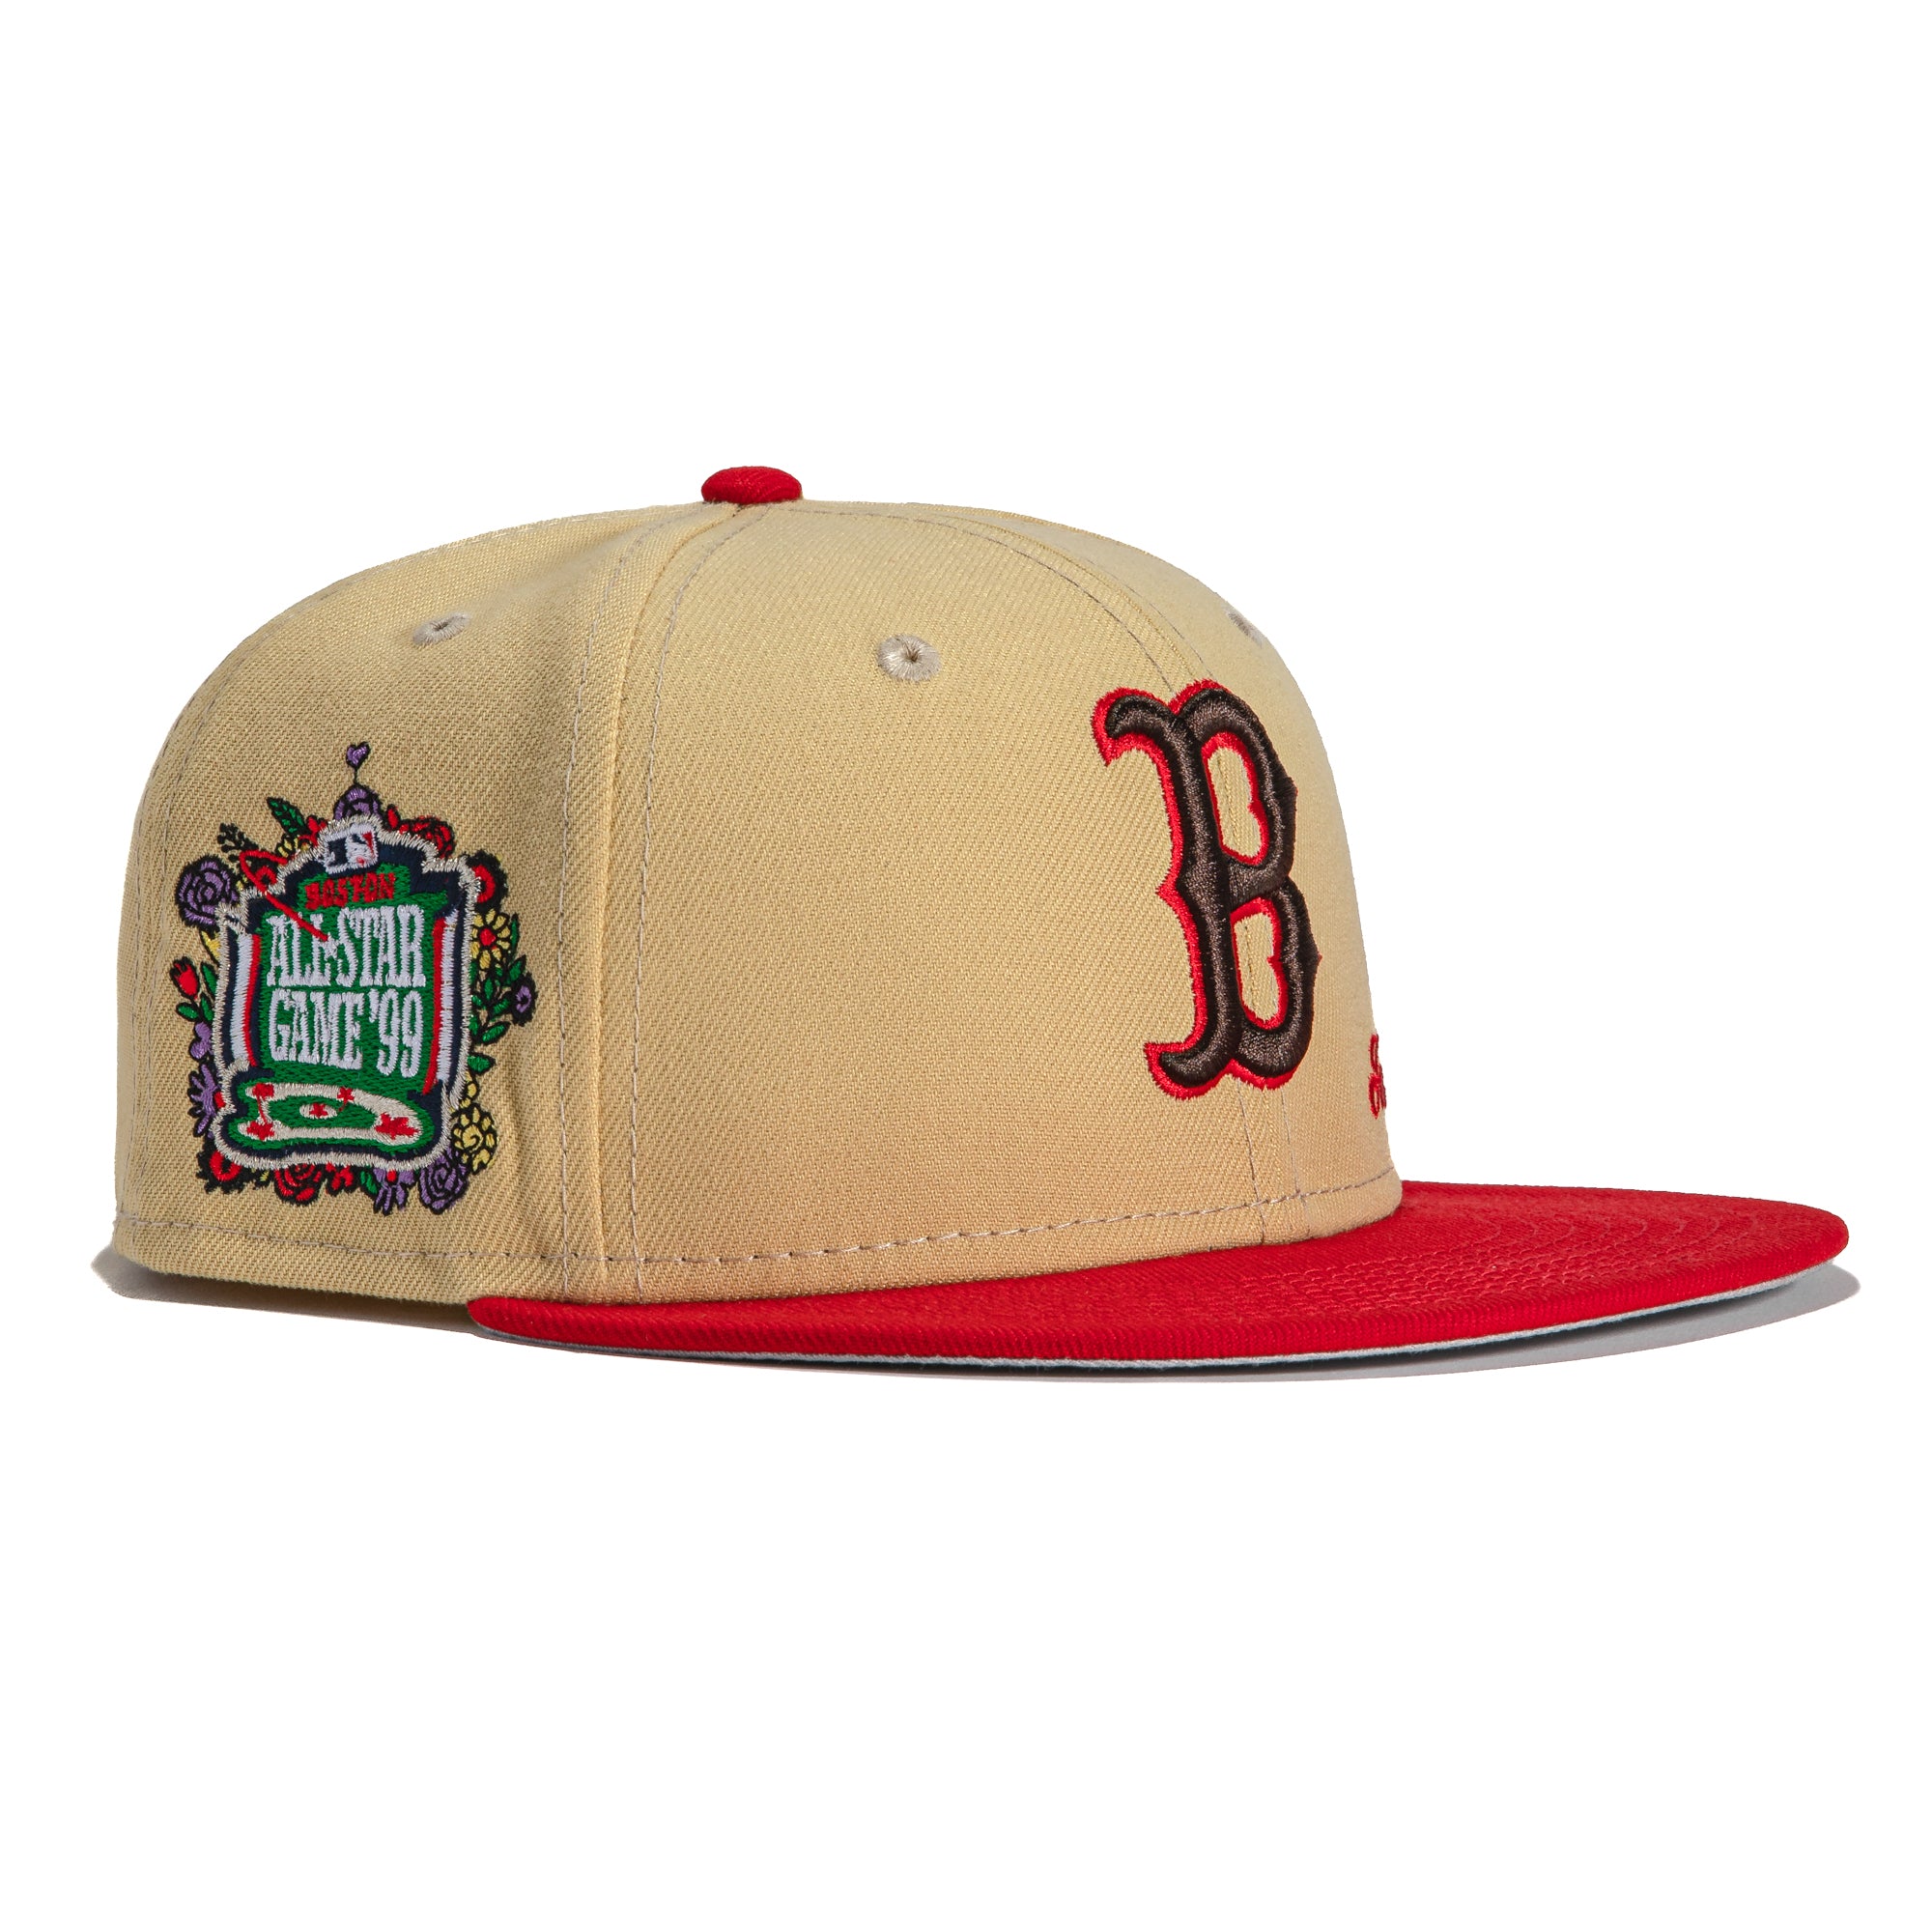 Boston PINWHEEL Red-White-Royal Fitted Hat